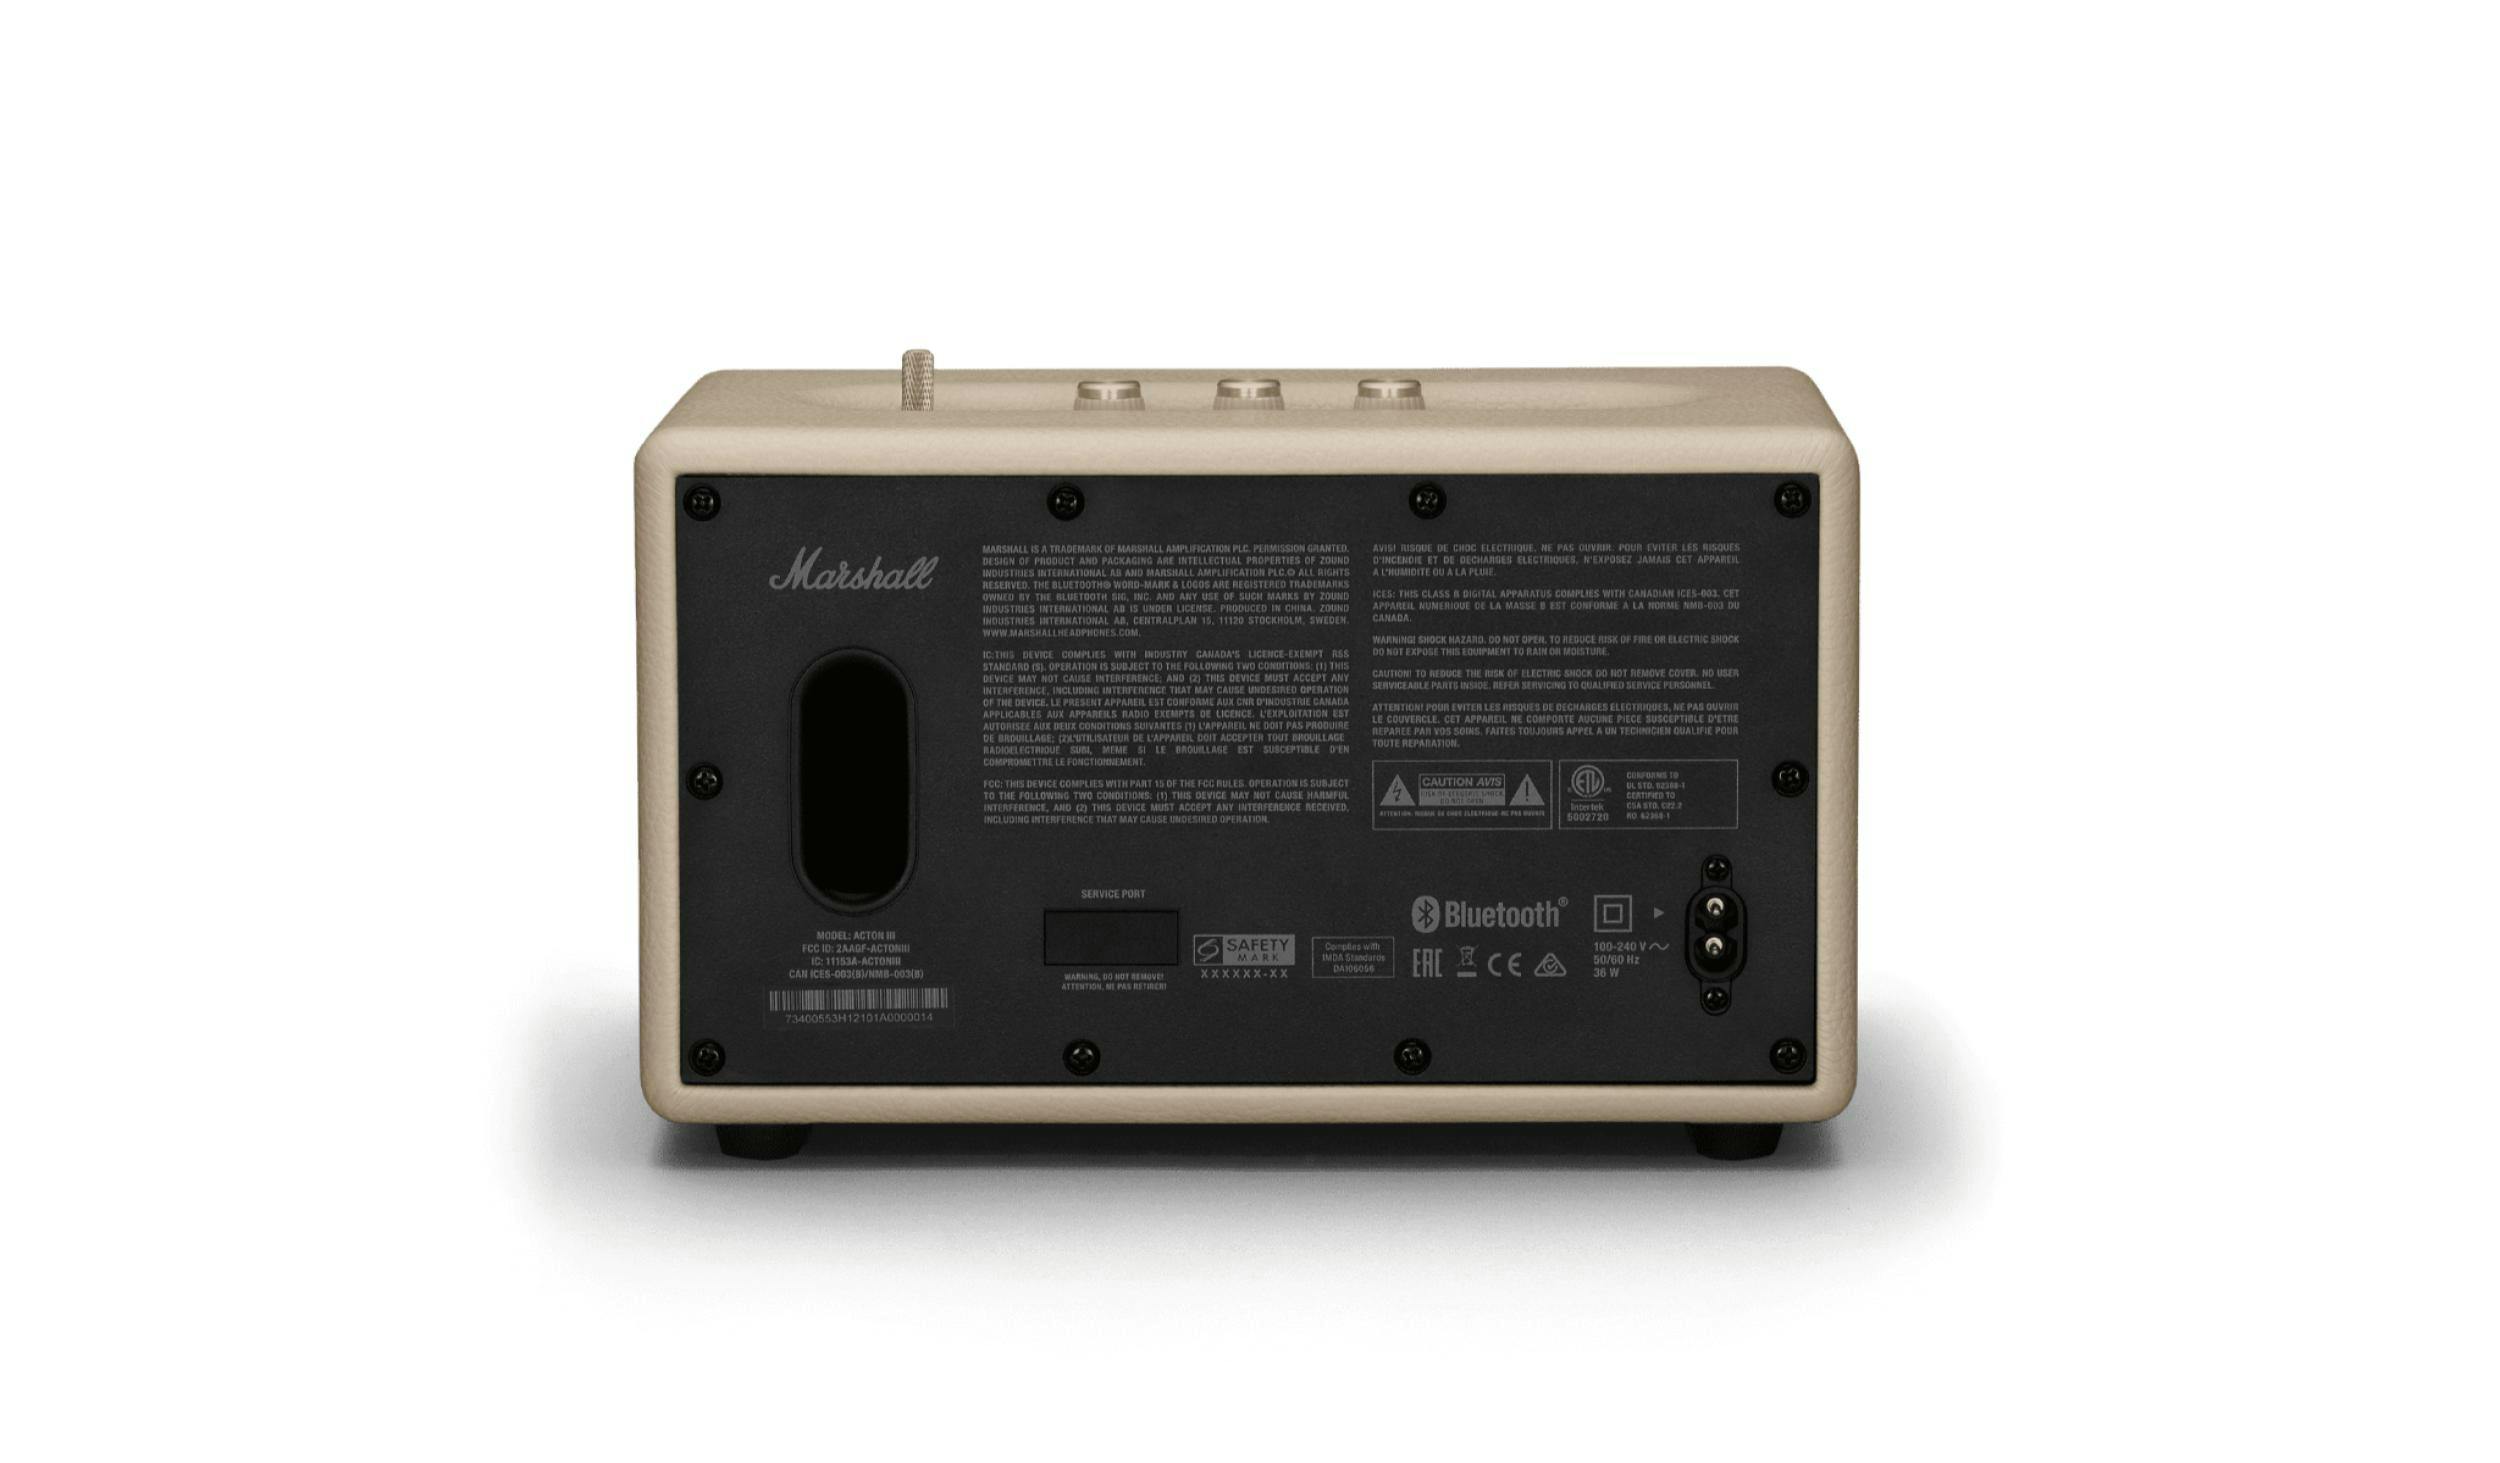 Marshall Woburn III Bluetooth Portable Wireless Speaker Black, Cream